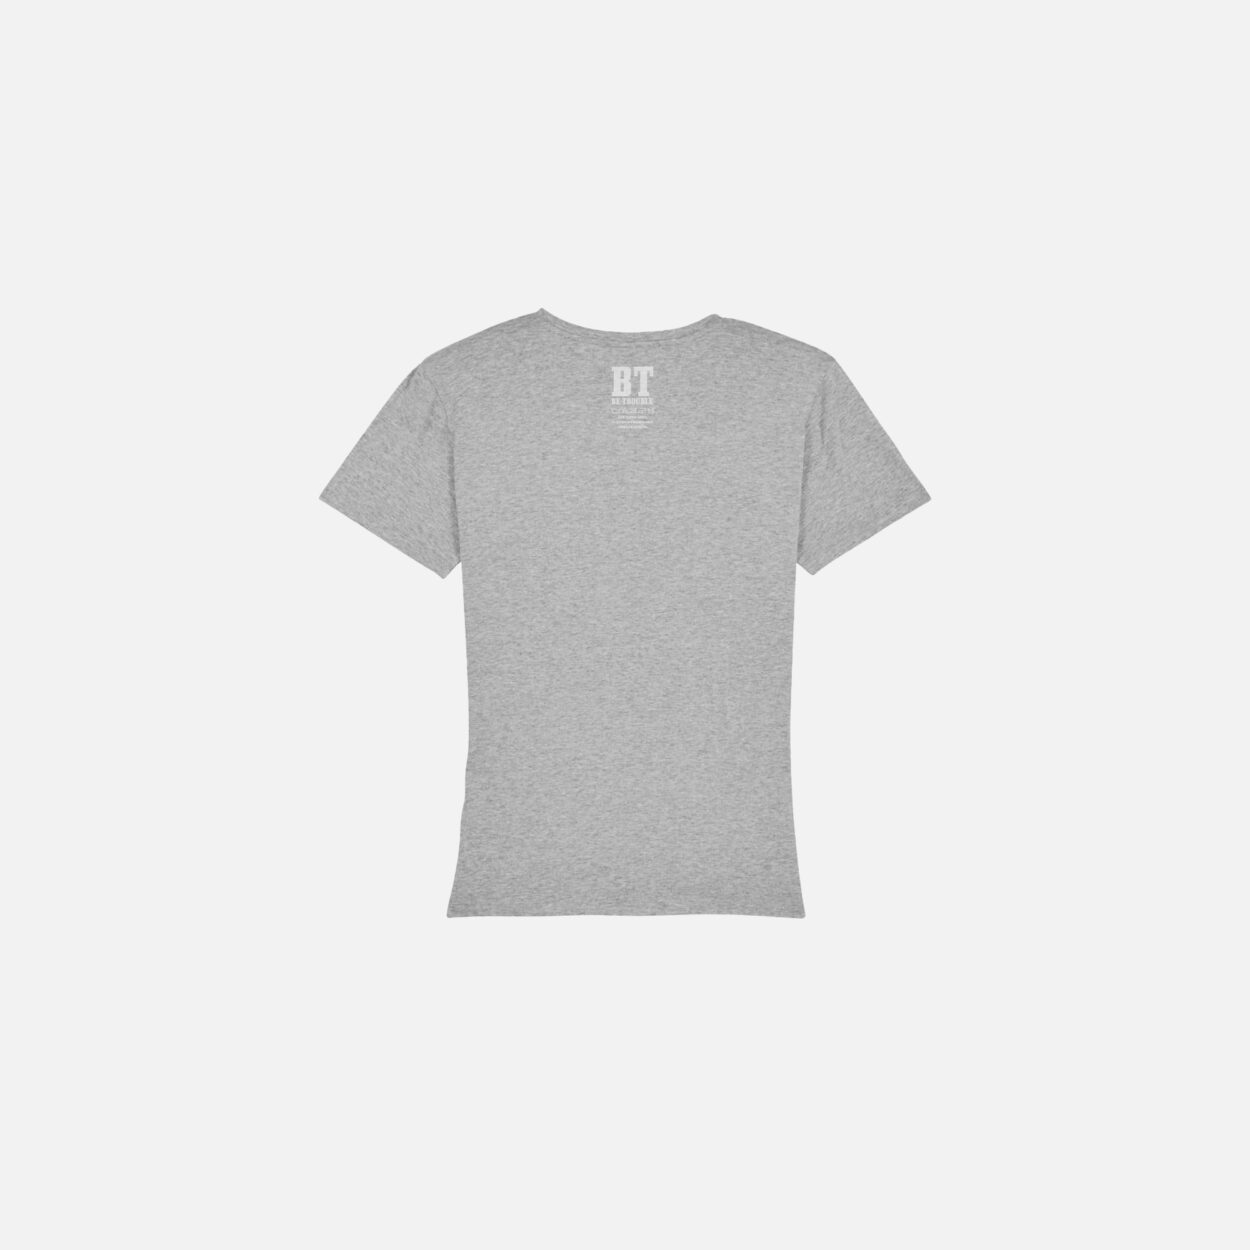 Limited Edition Sweet 16 - Runball Grey Shirt